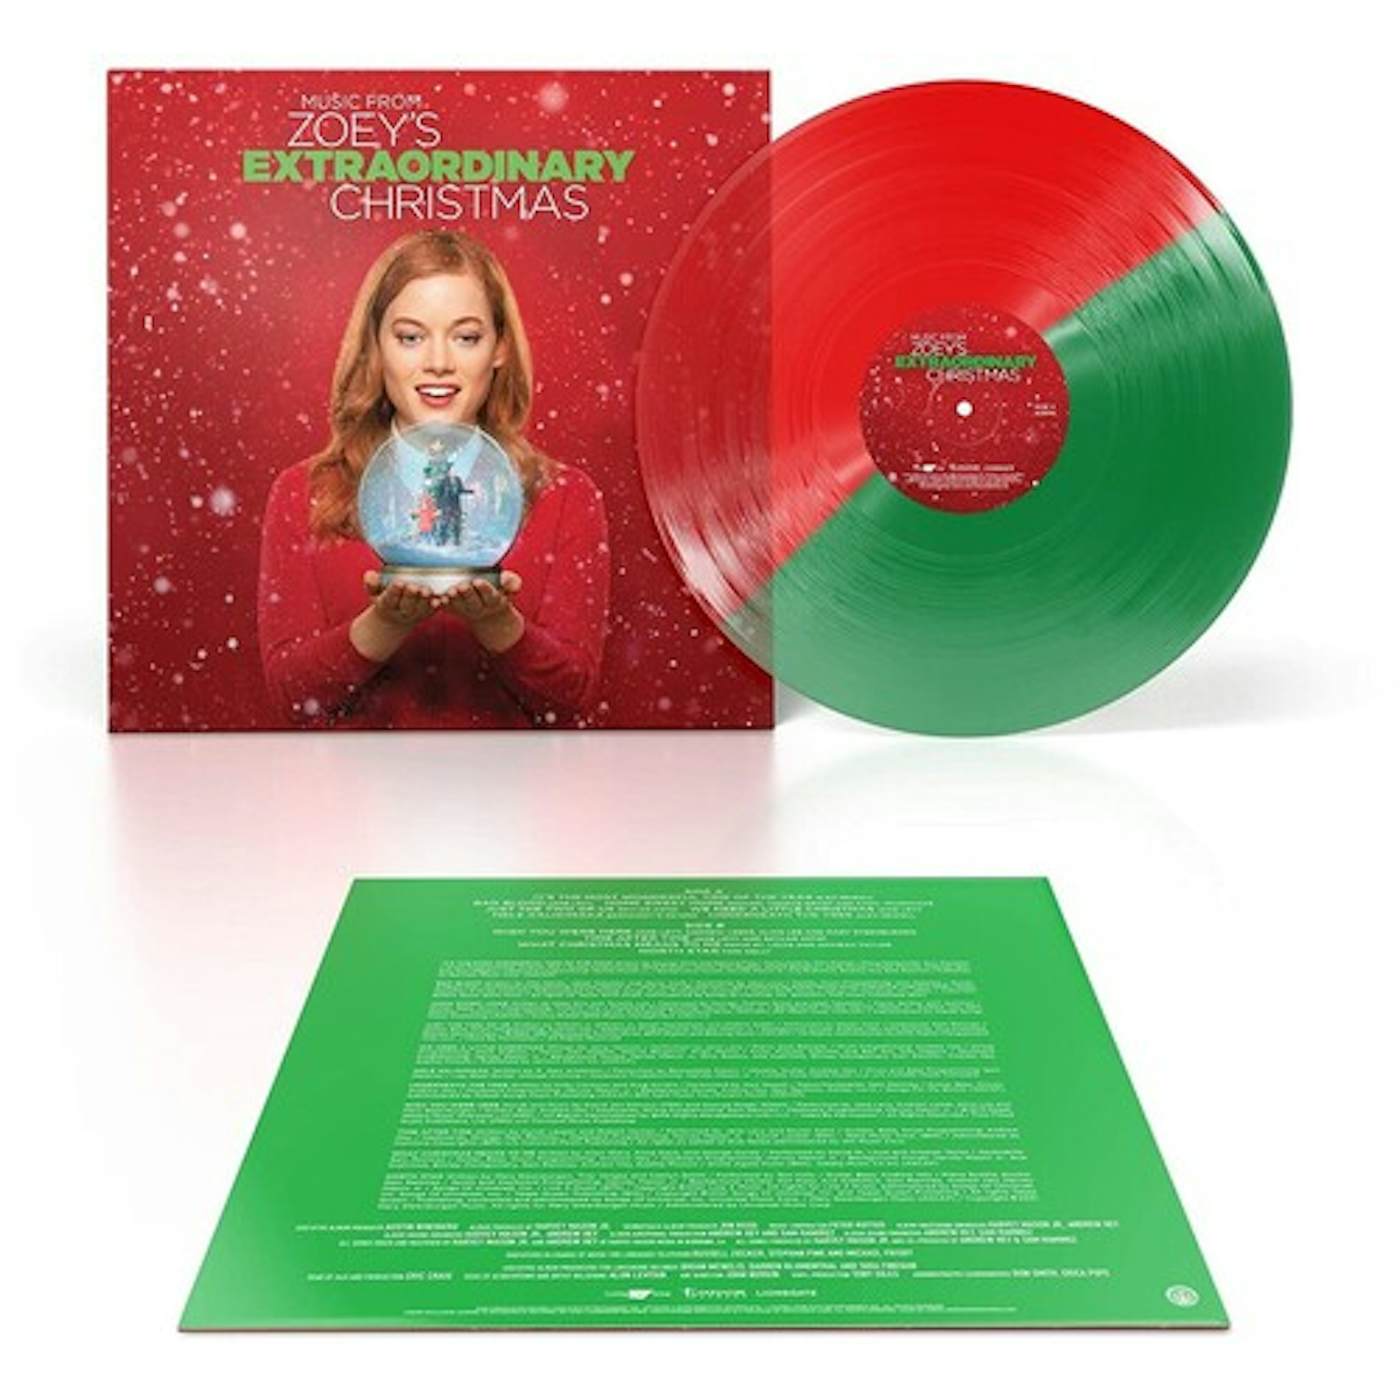 Tori Kelly MUSIC FROM ZOEY'S EXTRAORDINARY CHRISTMAS / Original Soundtrack Vinyl Record